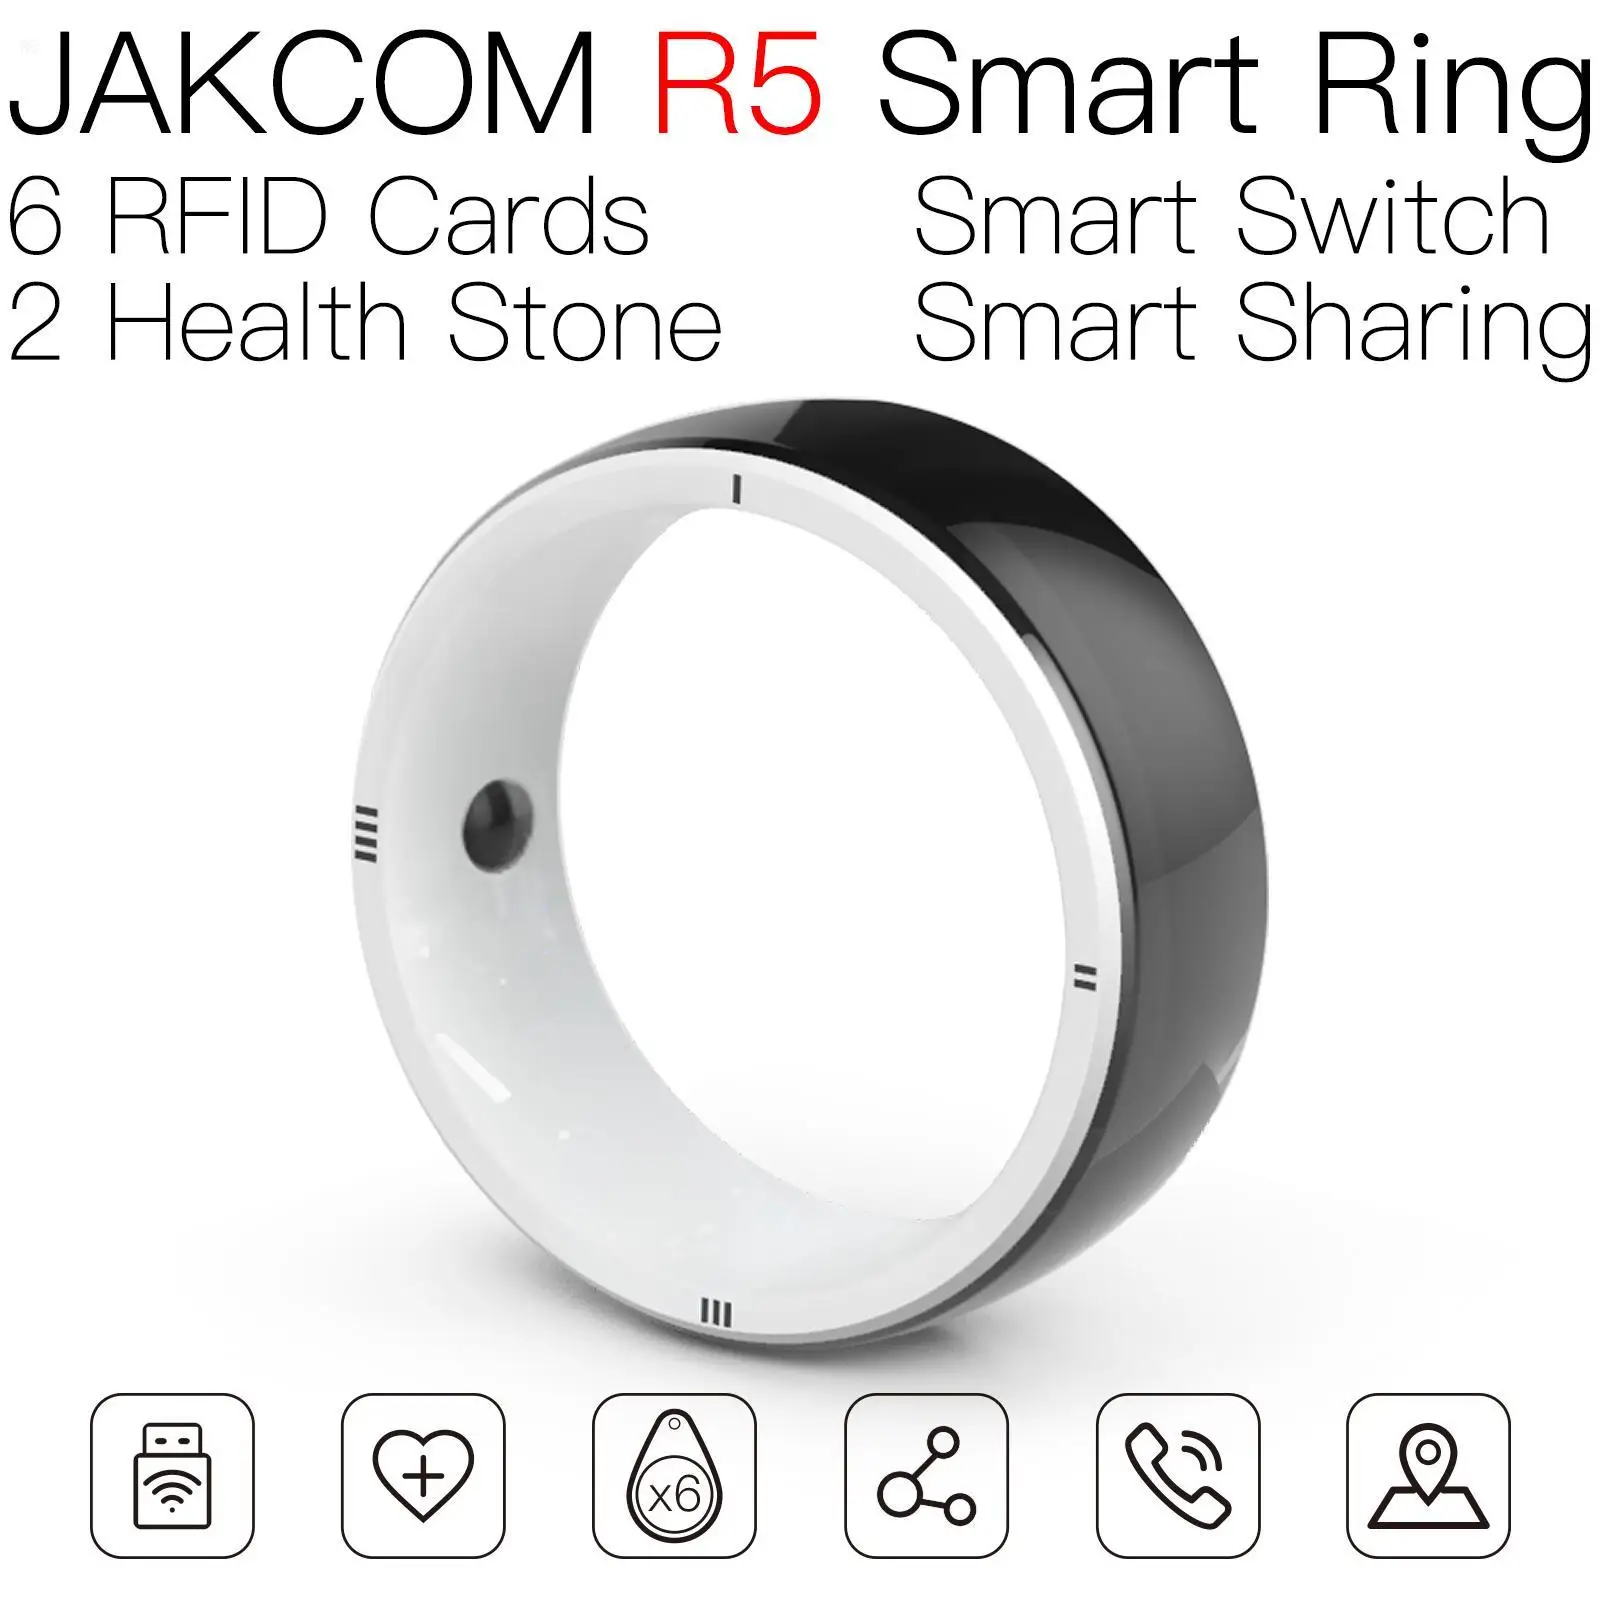 

JAKCOM R5 Smart Ring Super value than carding nfc j2a040 ring rfid 125 jordans 4 tag ic card mini uhf 860 960mhz lots smart